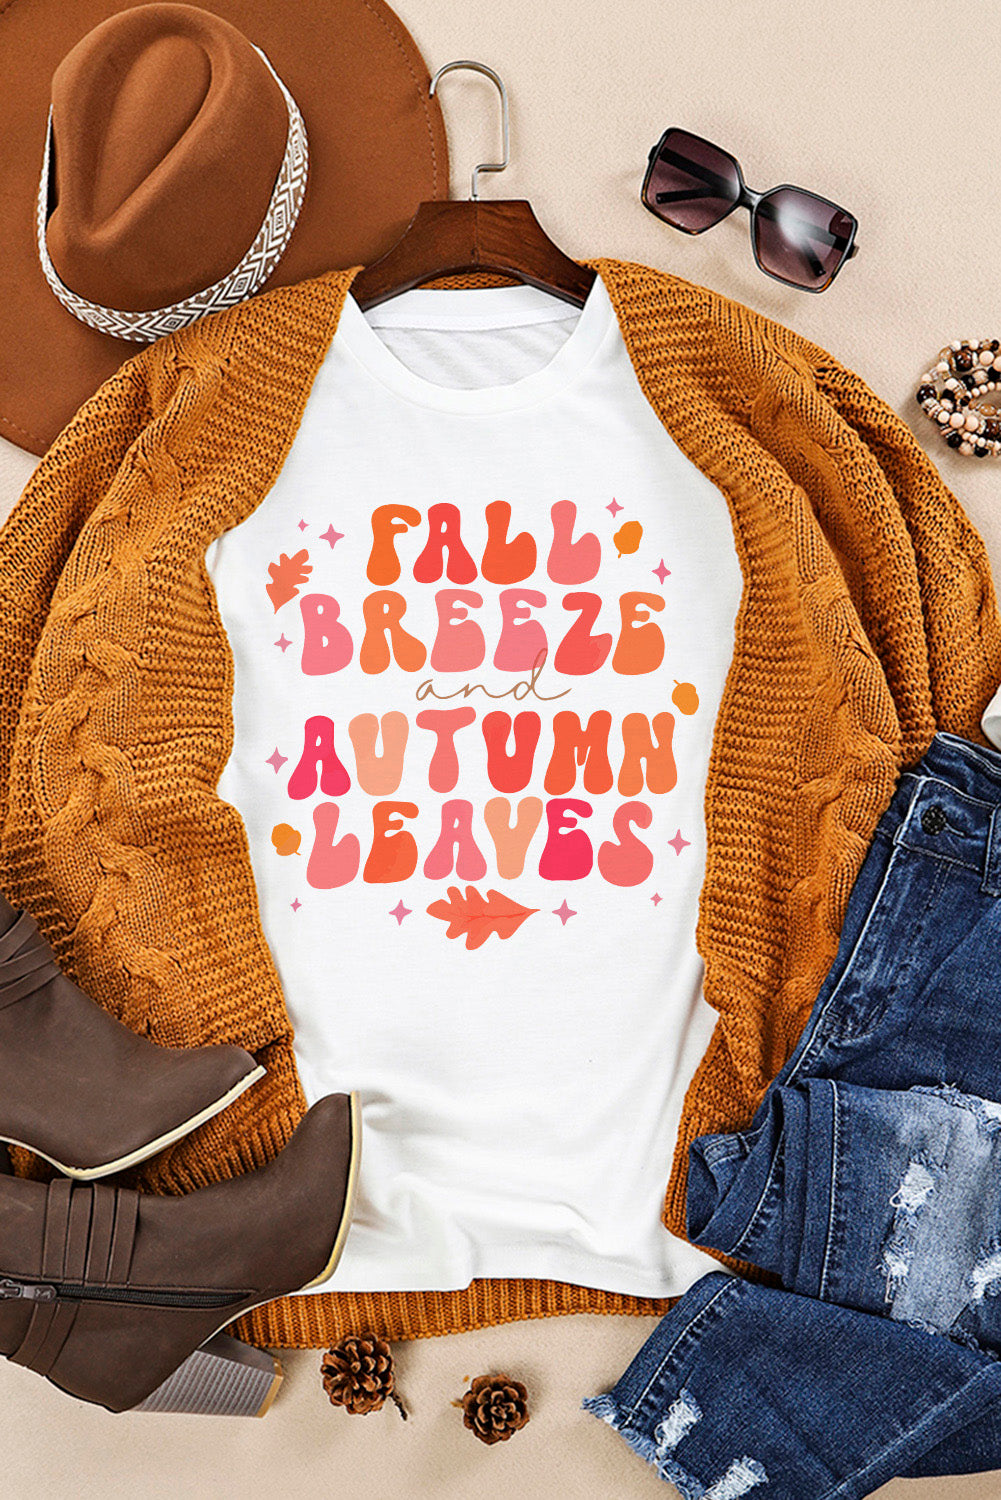 Khaki flannels hayrides pumpkins sweaters bonfires tee - white4 / s / 95% polyester + 5% elastane - graphic t-shirts